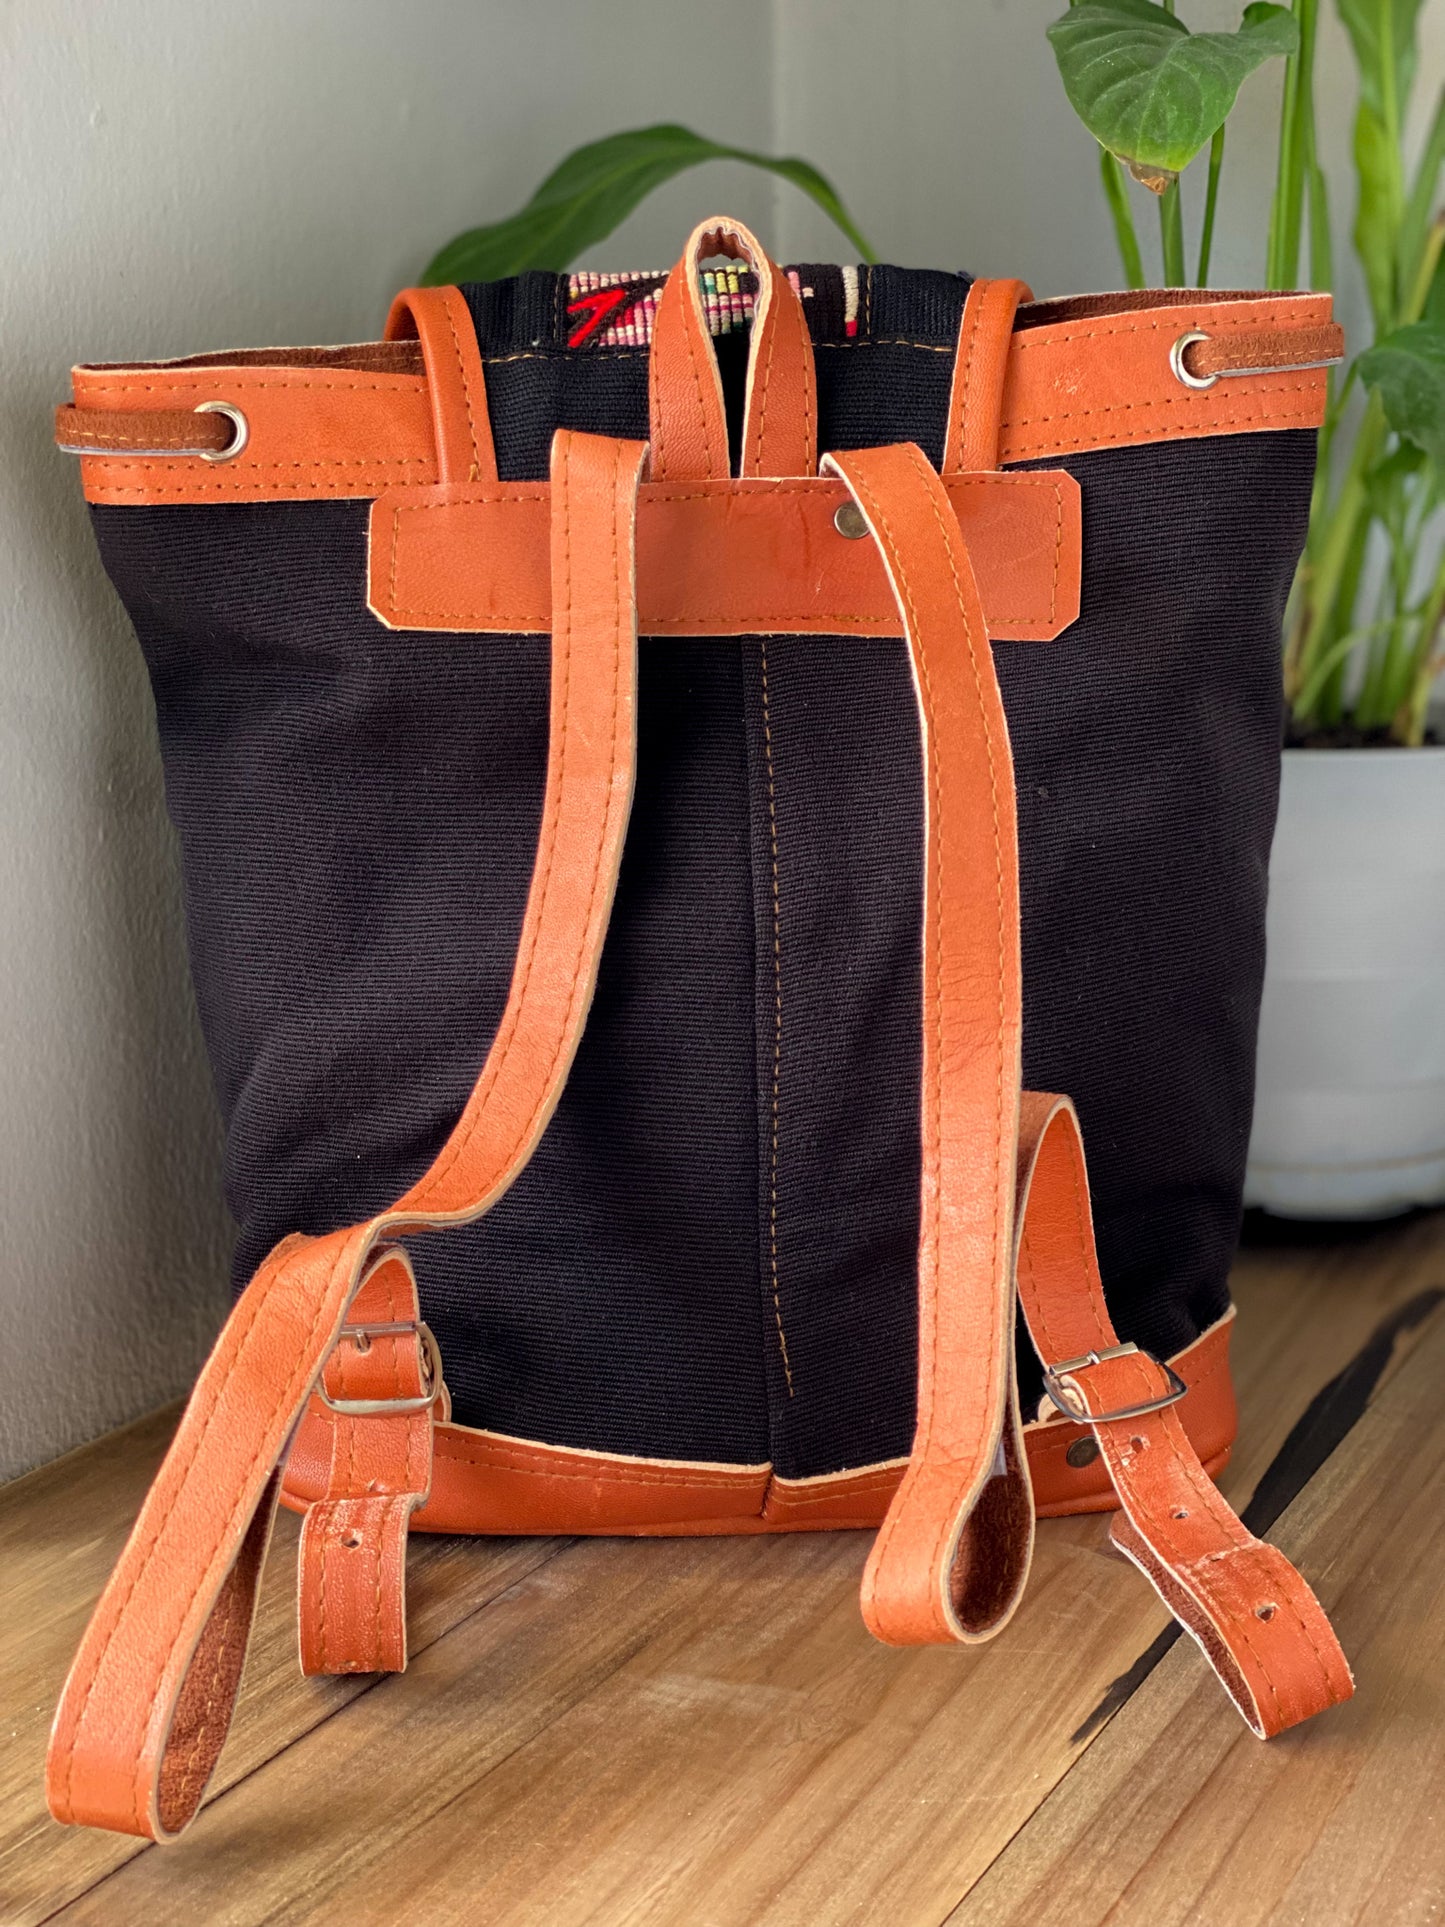 Handmade in Guatemala Handwoven Intricate Fabric Front Zipper Pocket Adjustable Straps Belt Buckle Closure Length 13” Width 11 1/2”.